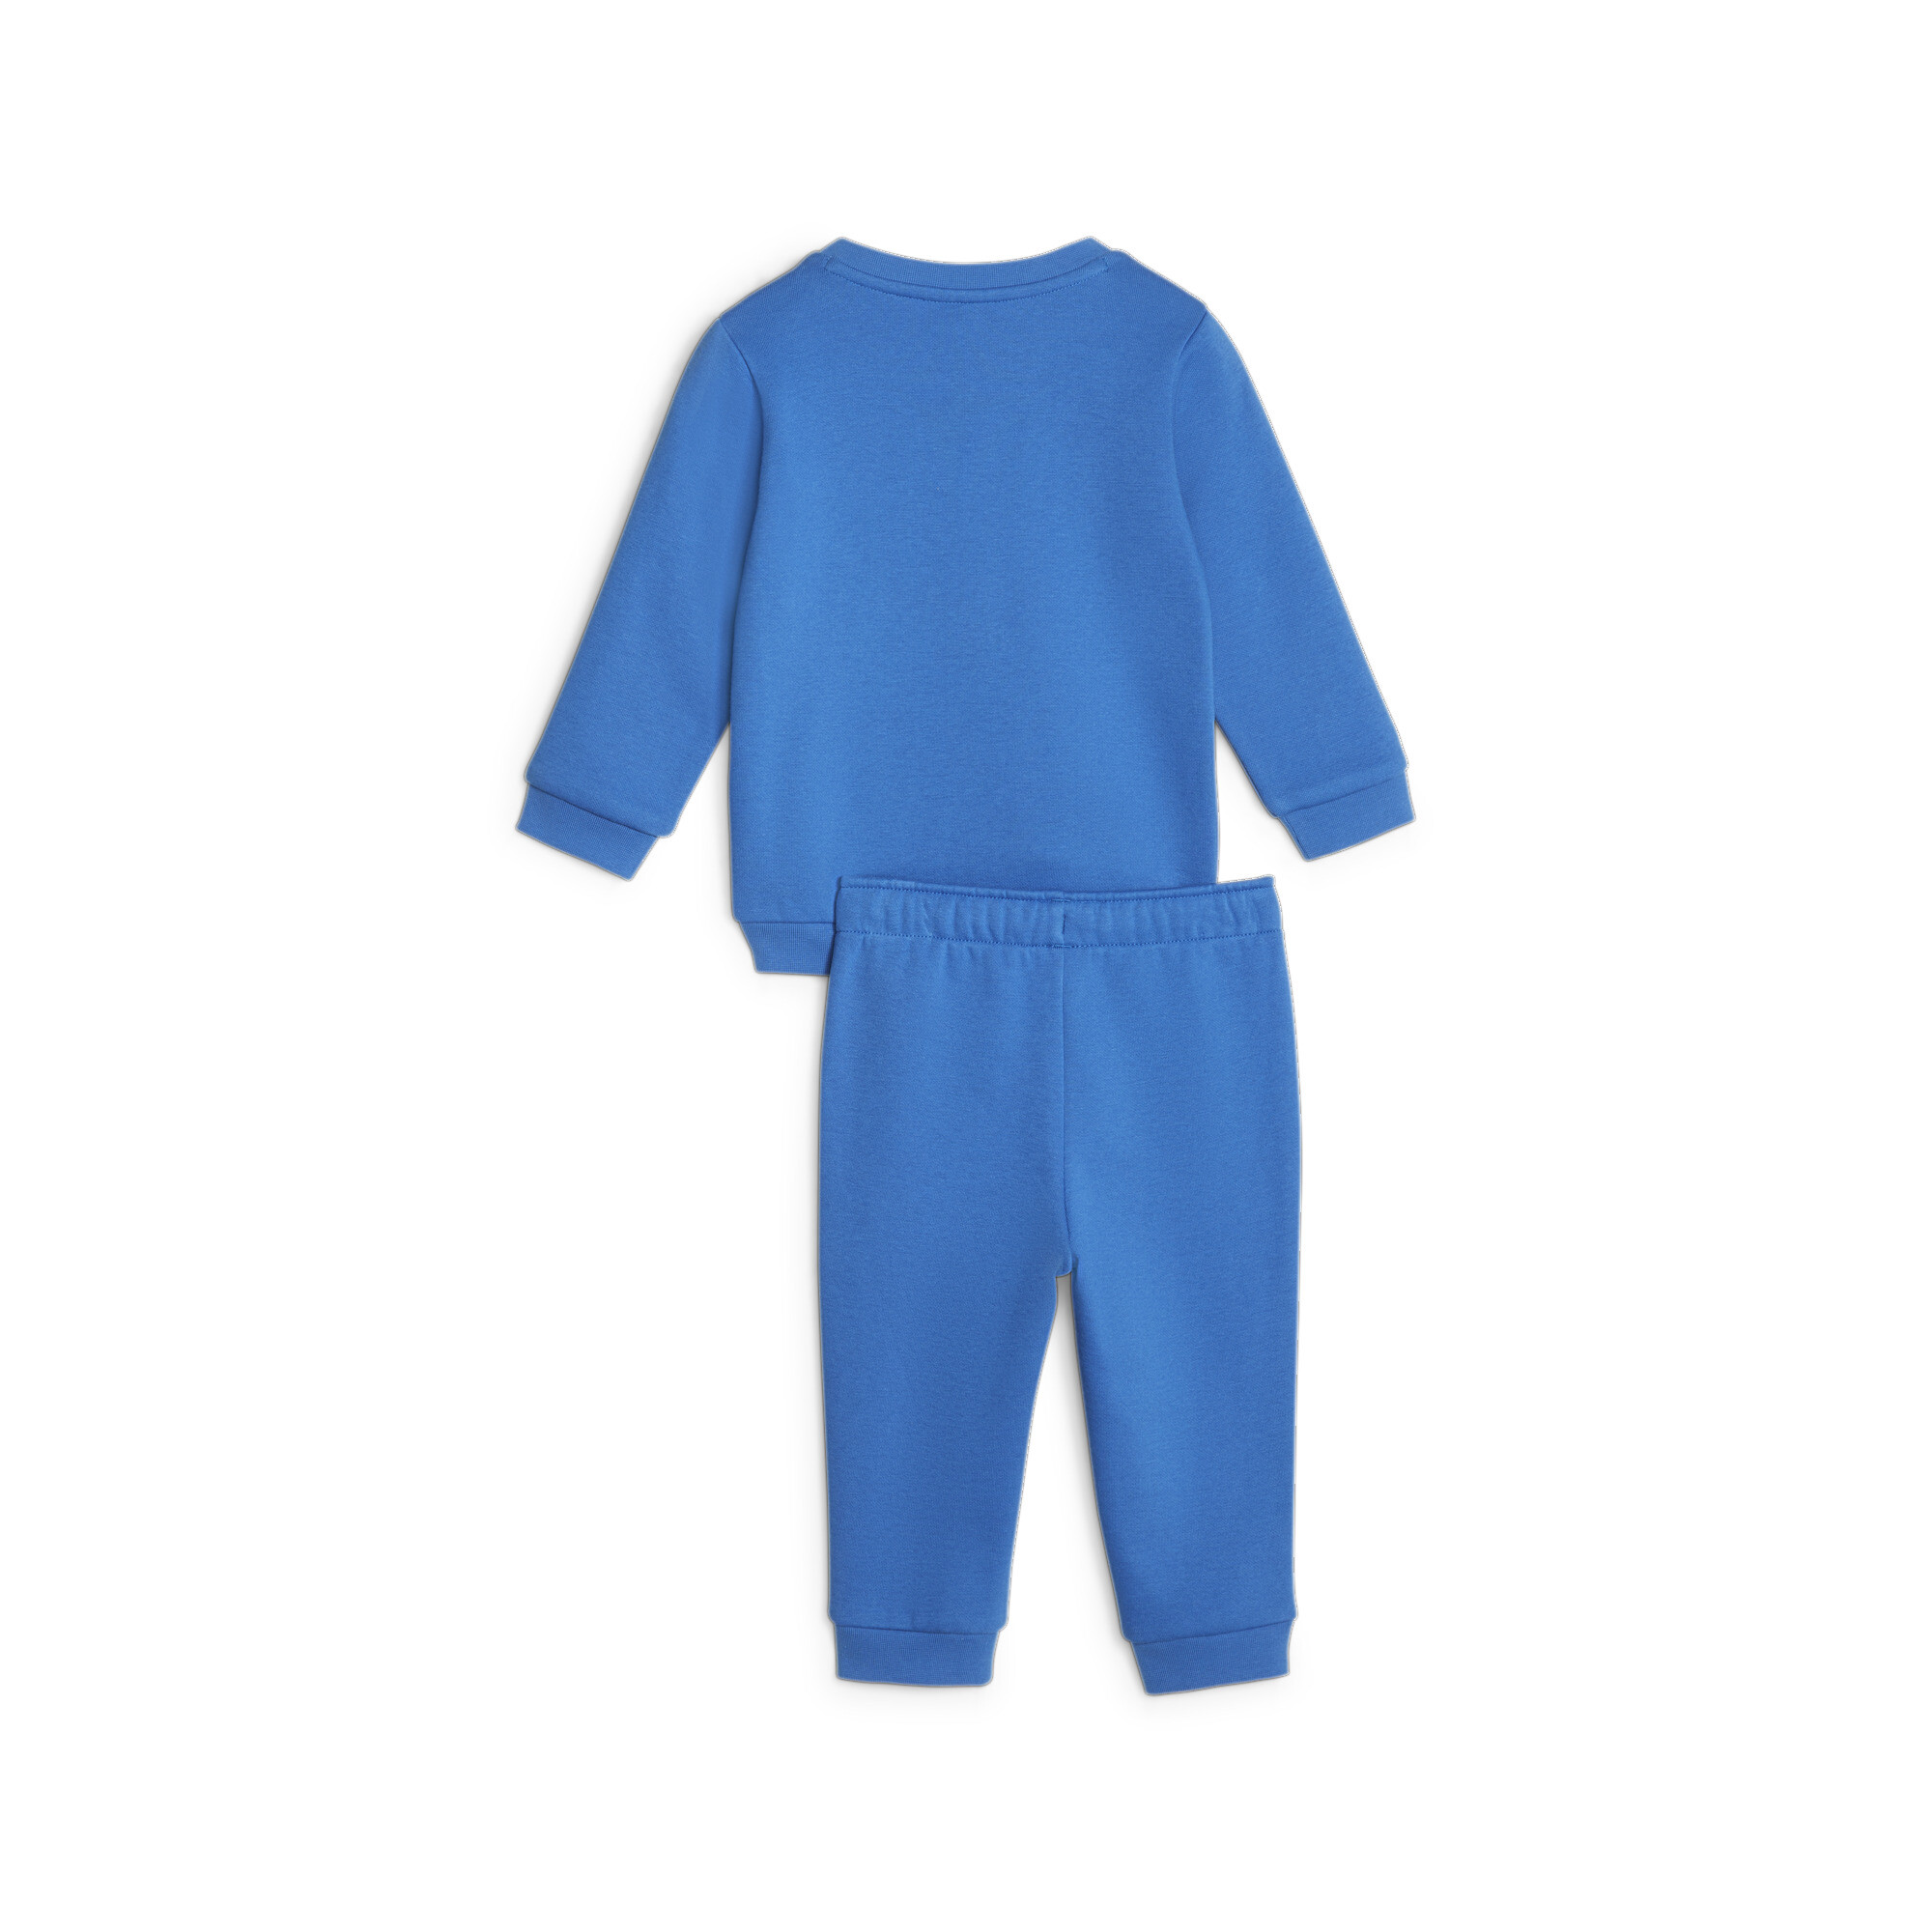 Puma Essentials Minicats Crew Neck Babies' Jogger Suit Sweatshirt, Blue Sweatshirt, Size 6-9M Sweatshirt, Clothing